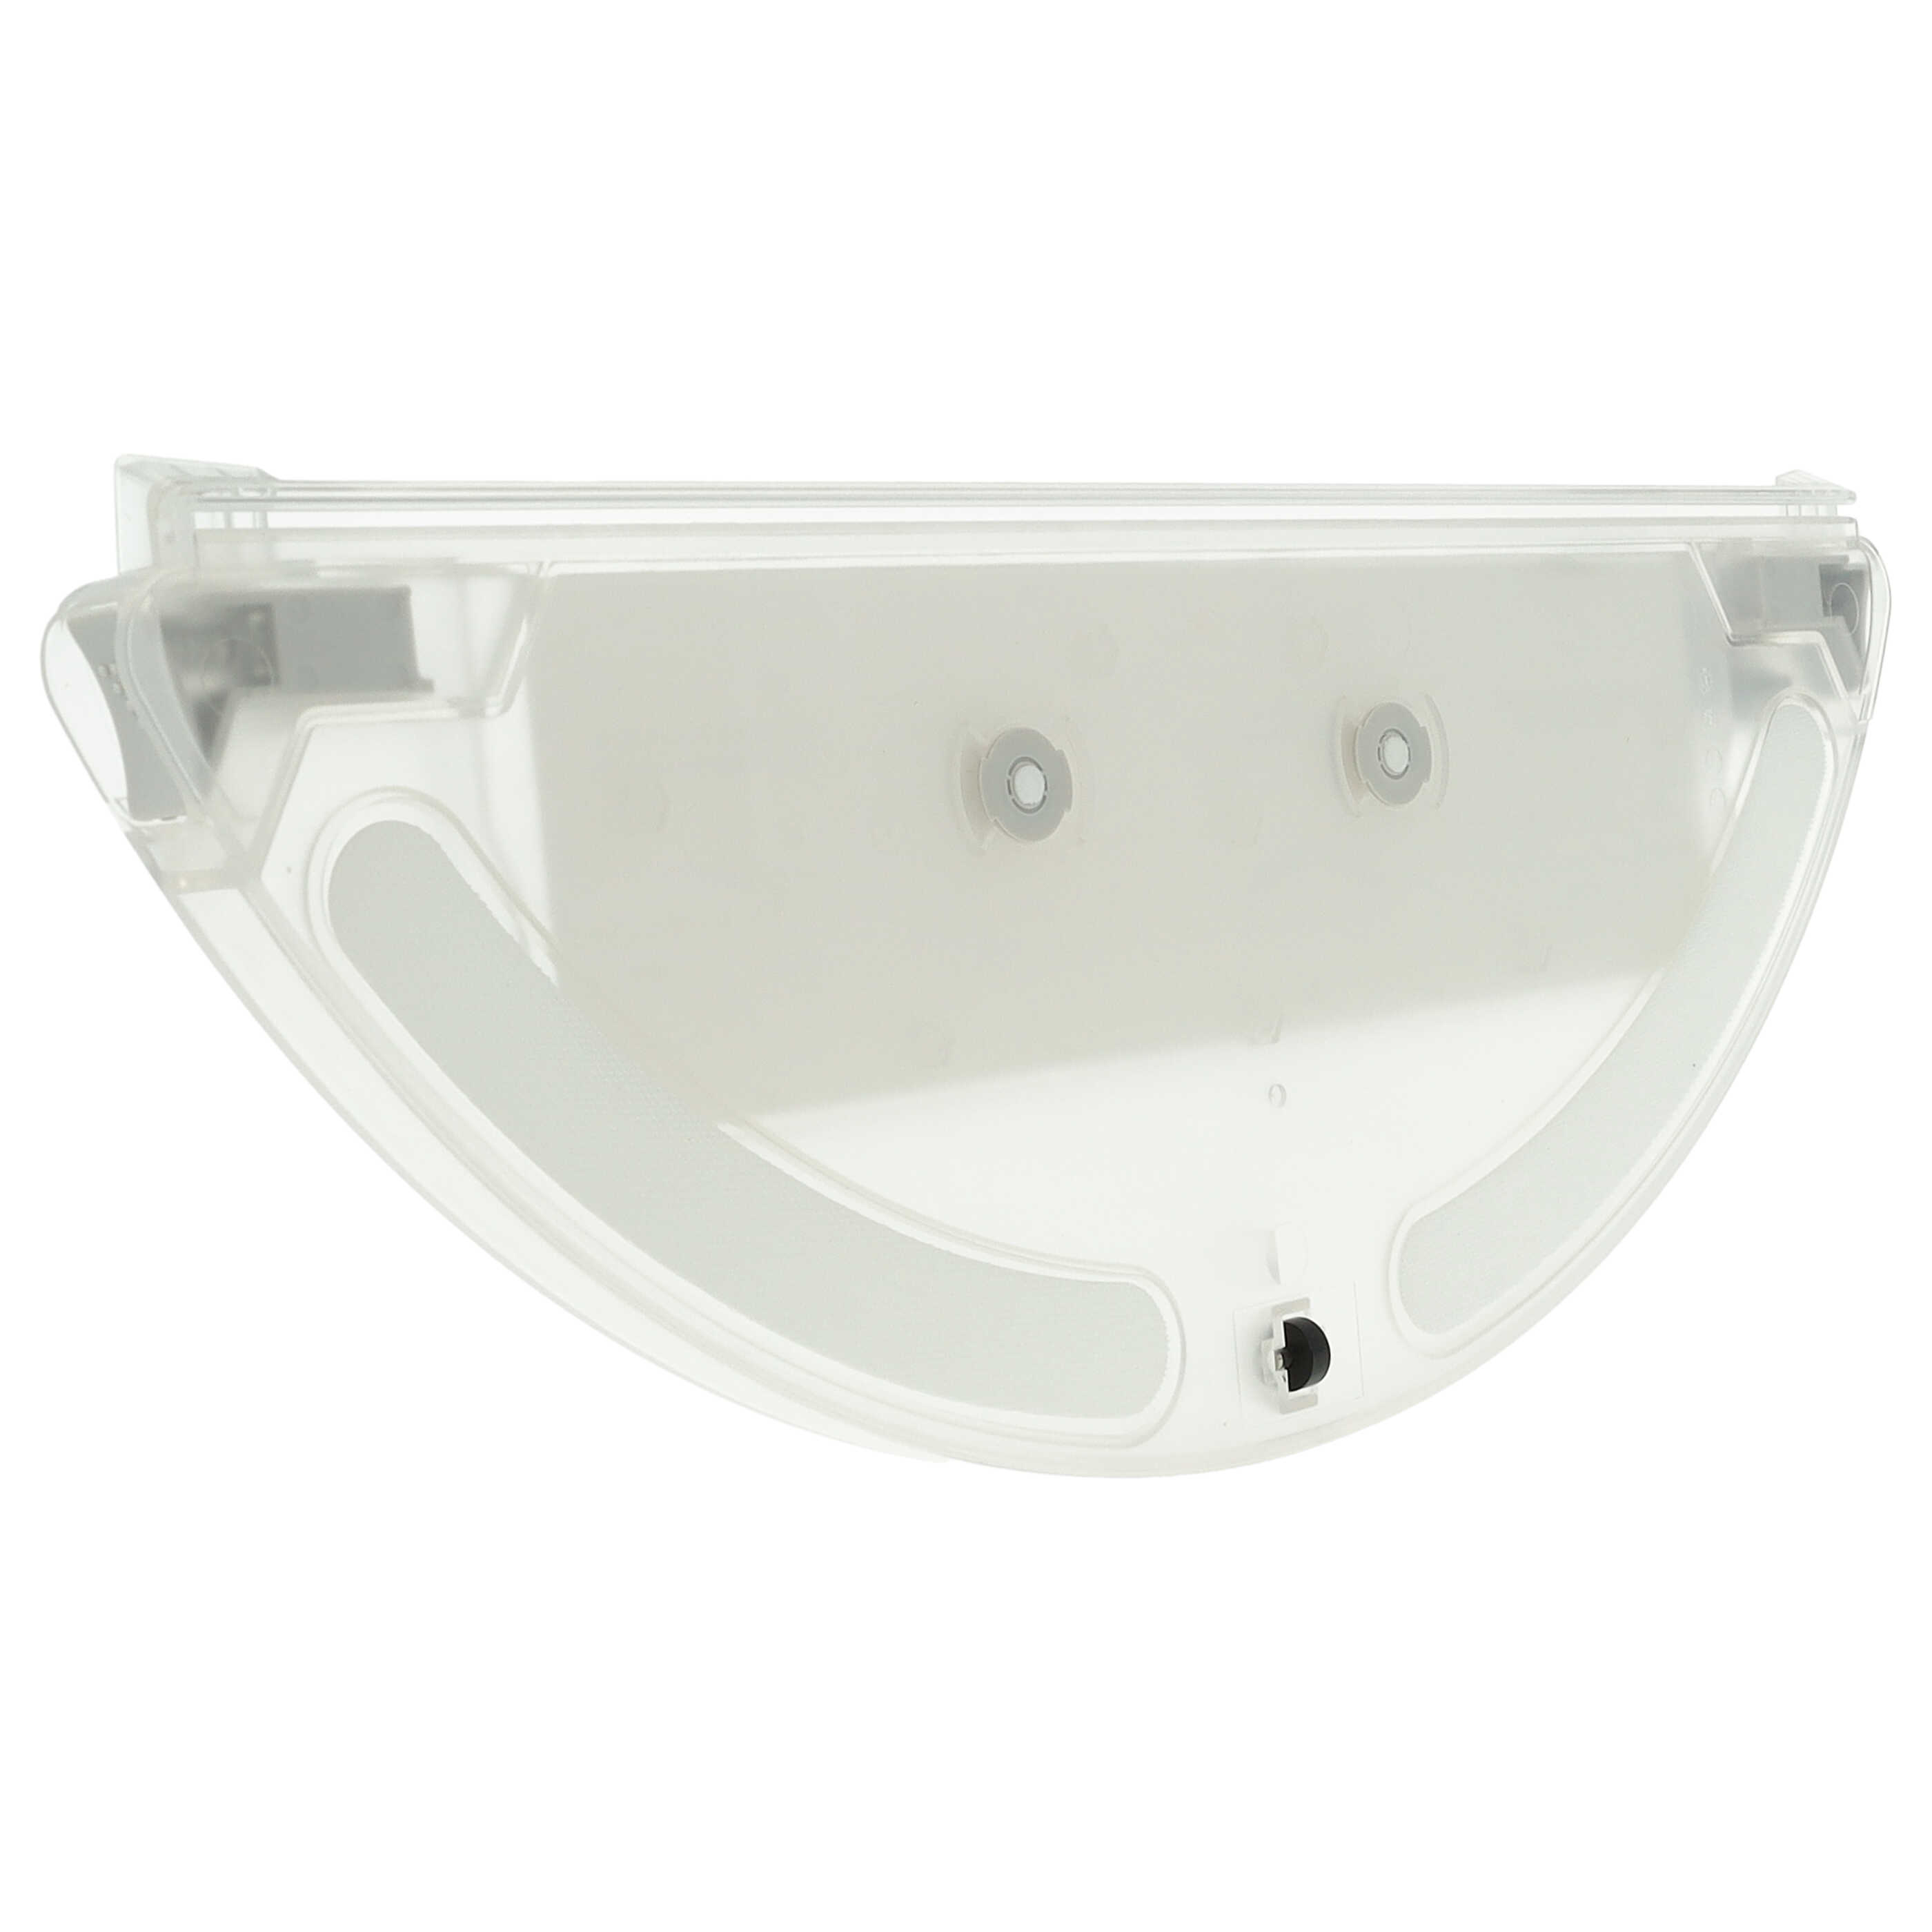 Mop Plate suitable for Xiaomi Roborock S6 Robot Vacuum Cleaner - 140 ml Capacity, ABS Plastic, transparent